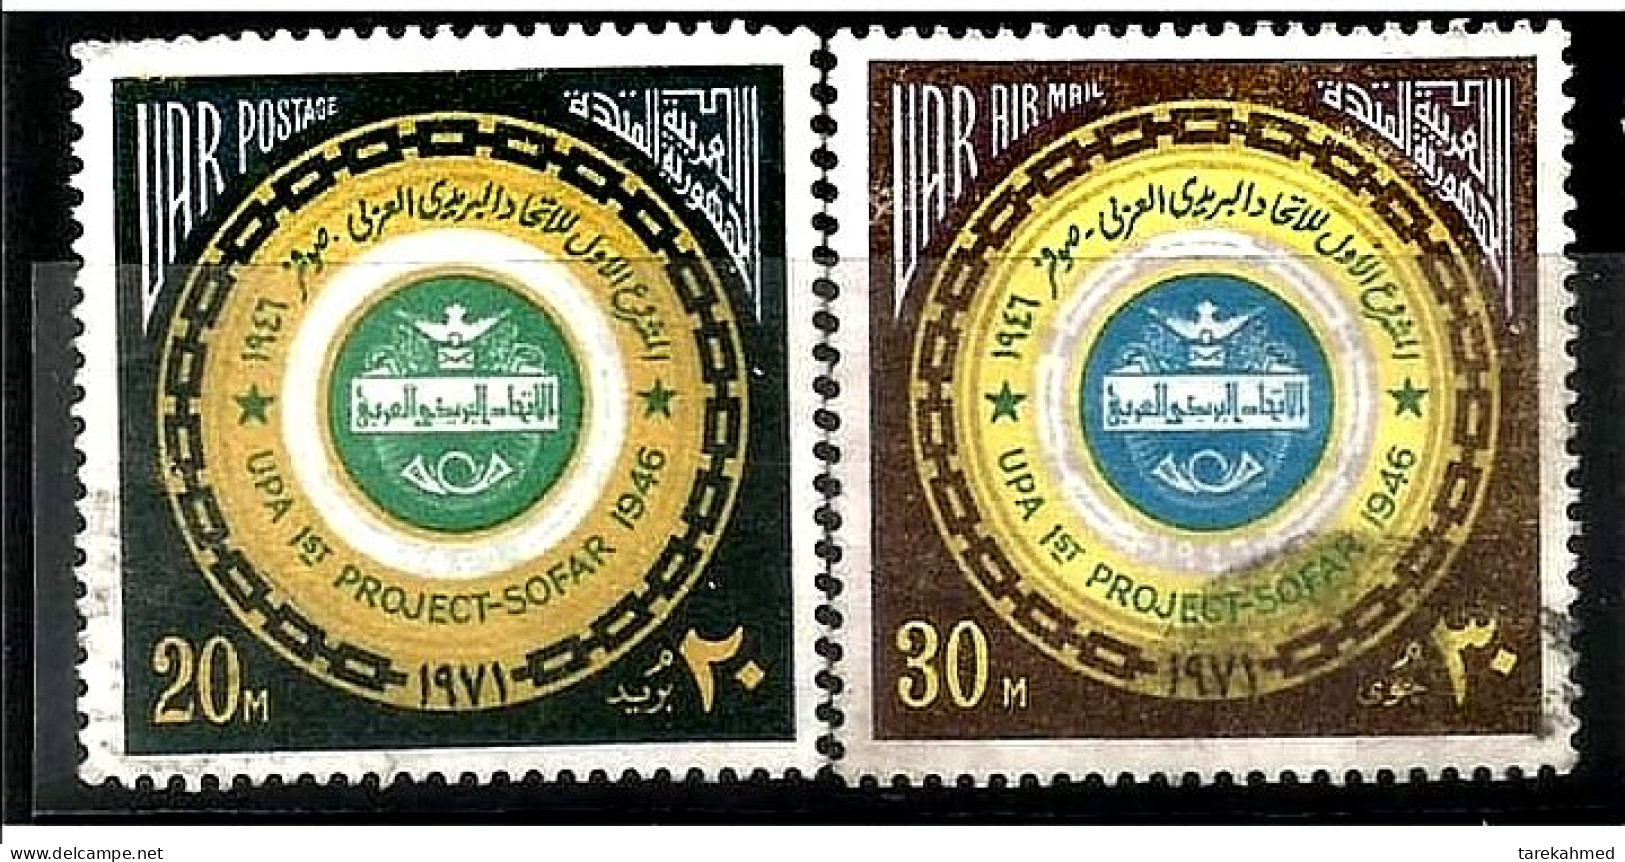 EGYPT 1971, Complete SET Of The CONFERENCE OF SOFAR, LEBANON ESTABILISHING THE APU, VF' - Gebraucht